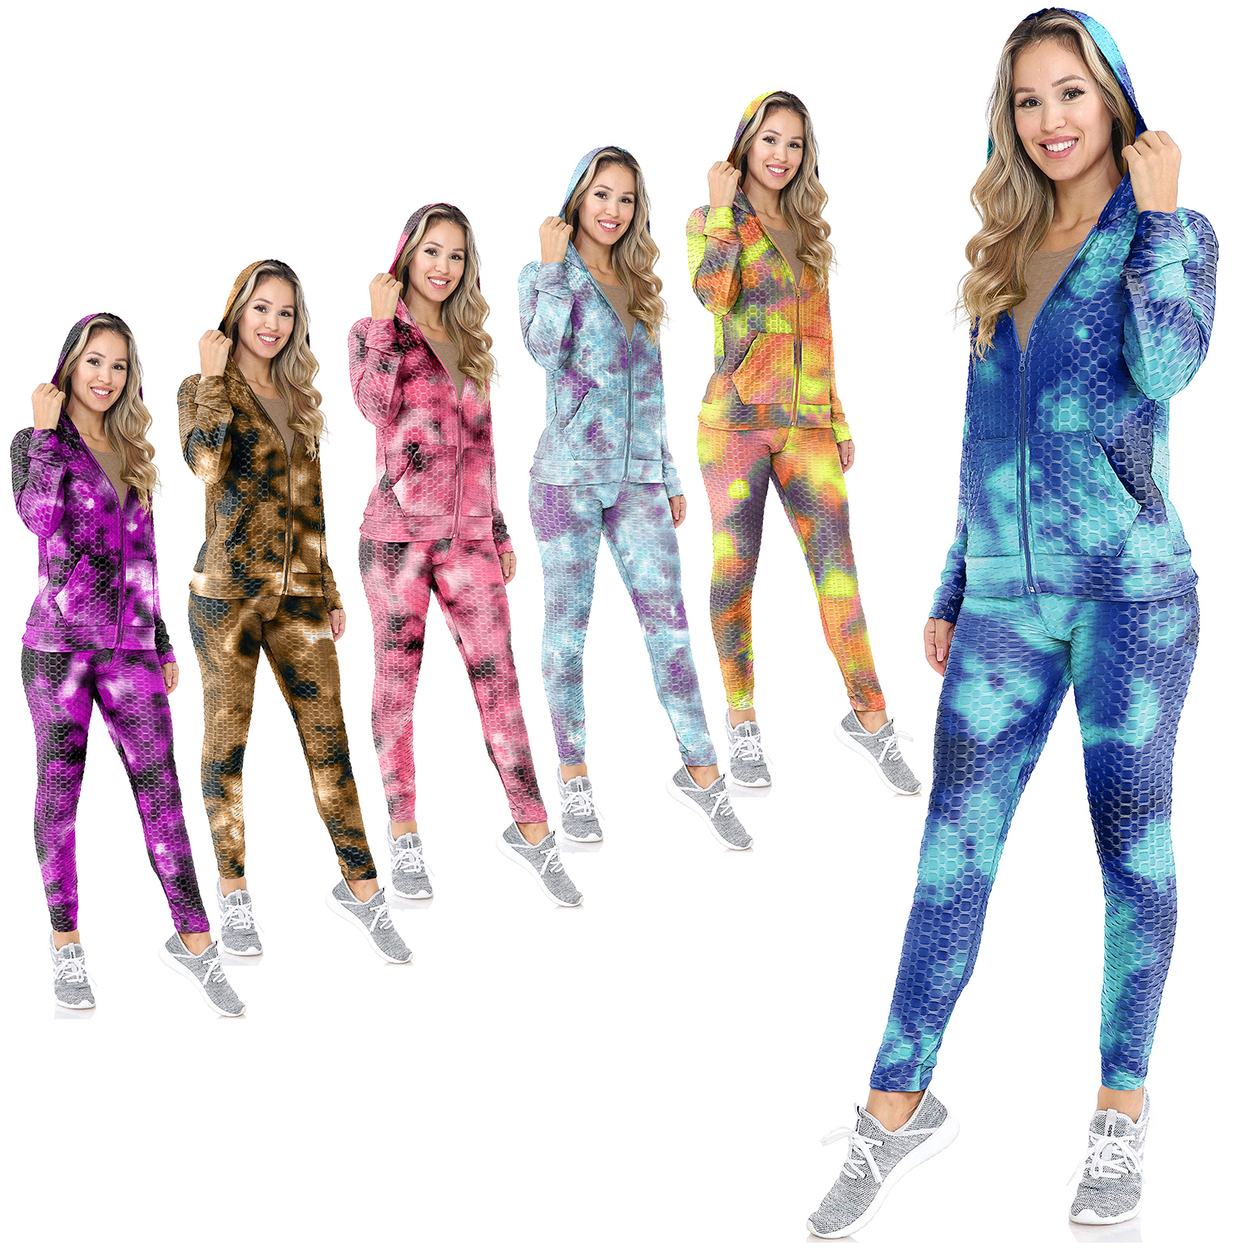 2-Set: Women's Athletic Anti-Cellulite Textured Tie Dye Body Contour Yoga Track Suit W/ Hood - Medium, Tie Dye